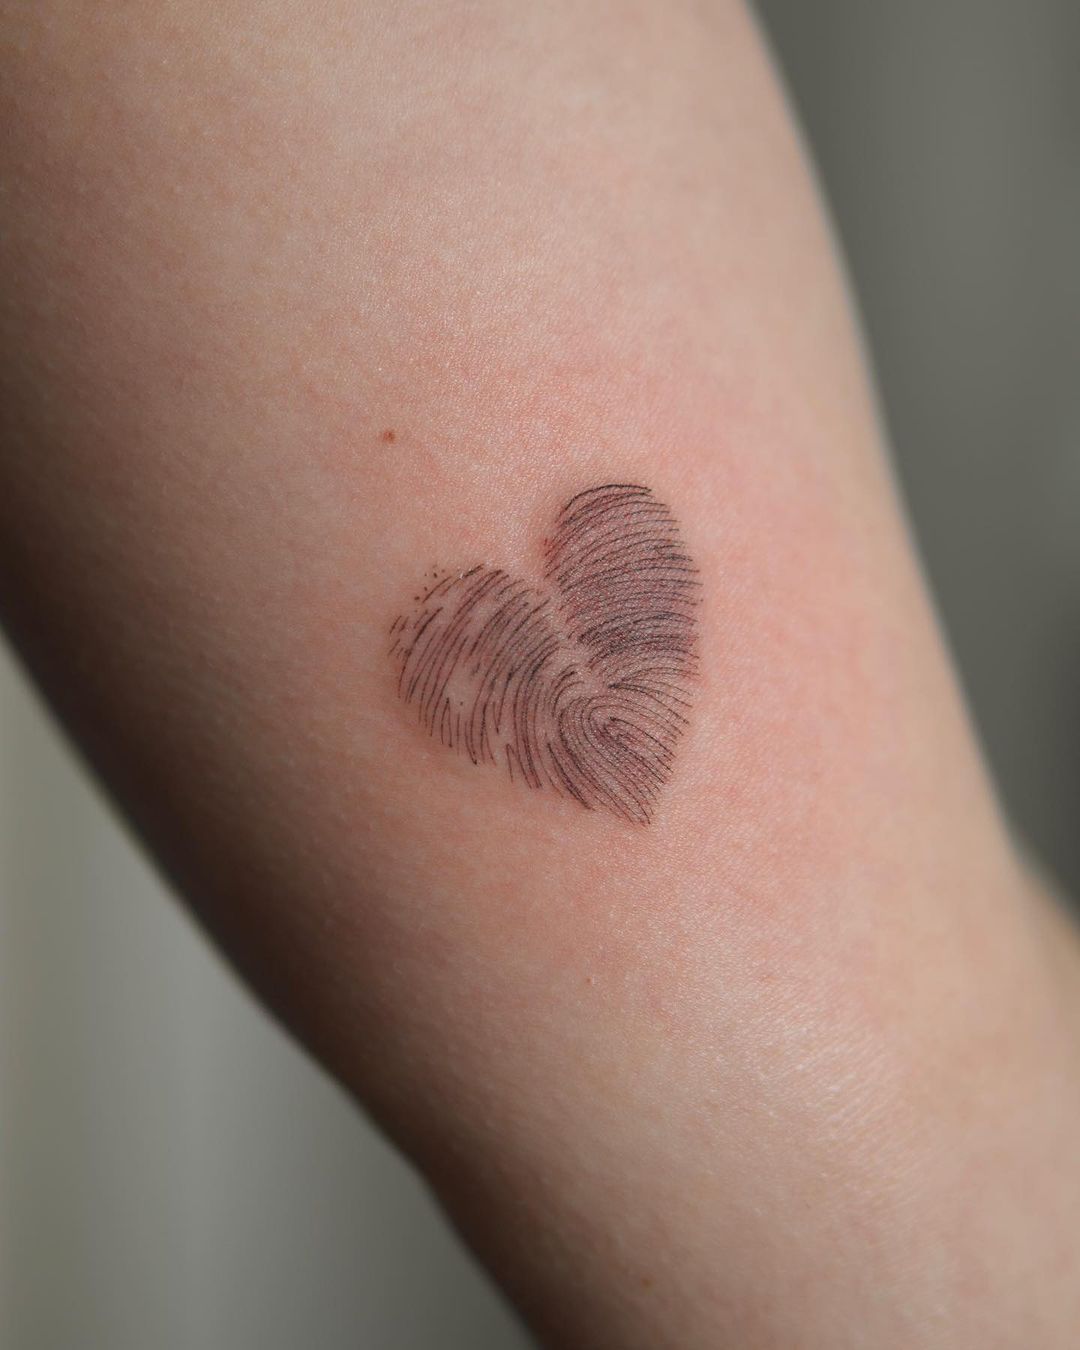 Dotwork tattoo design by alunar.ink